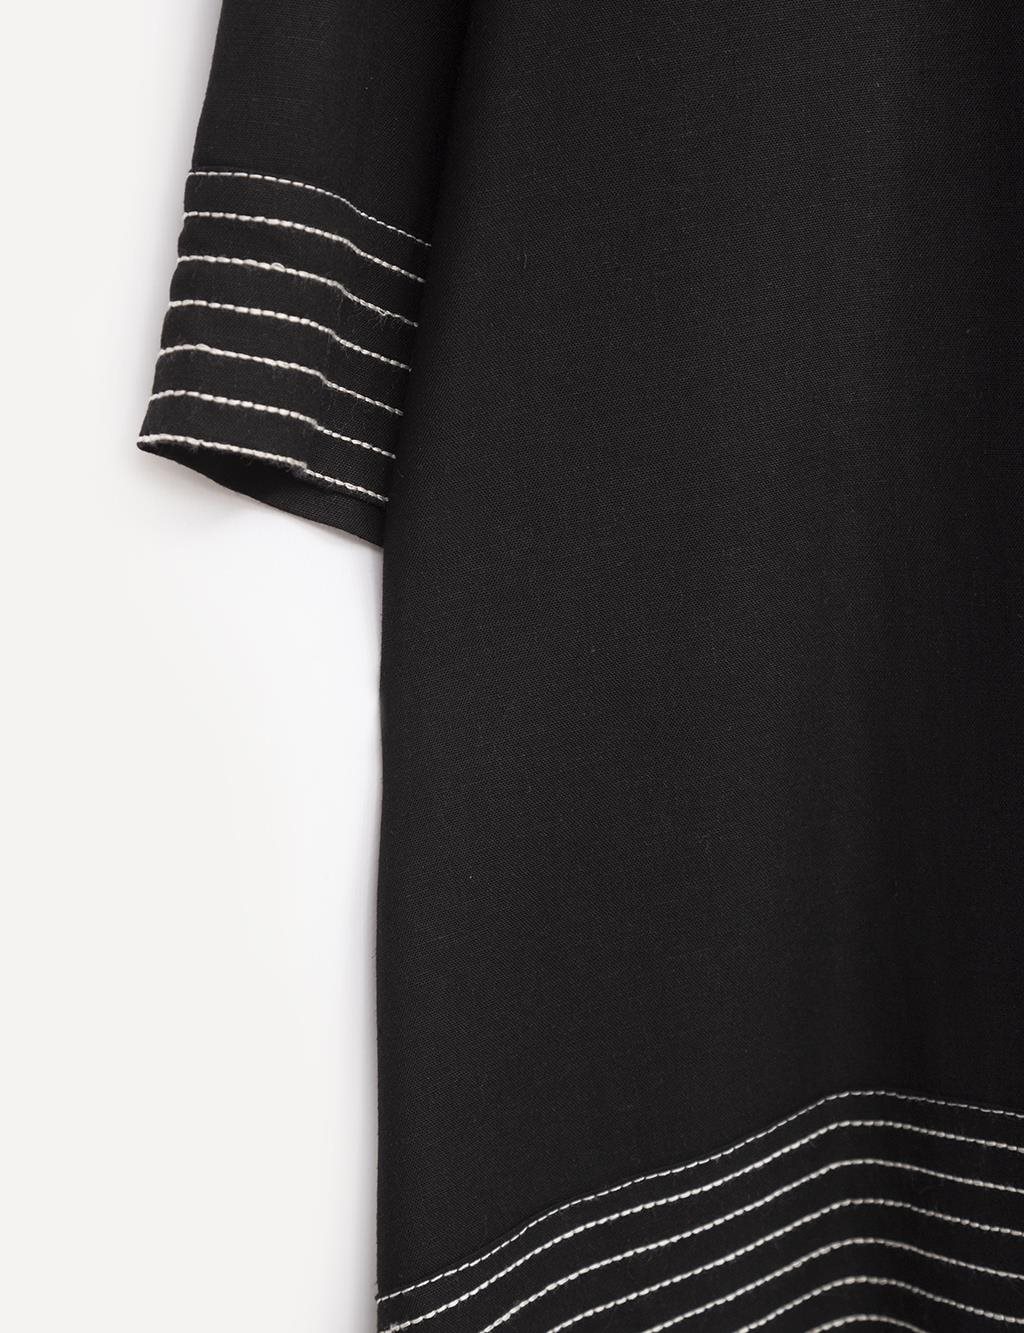 KYR Embroidered Low Sleeve Wear-Go Black